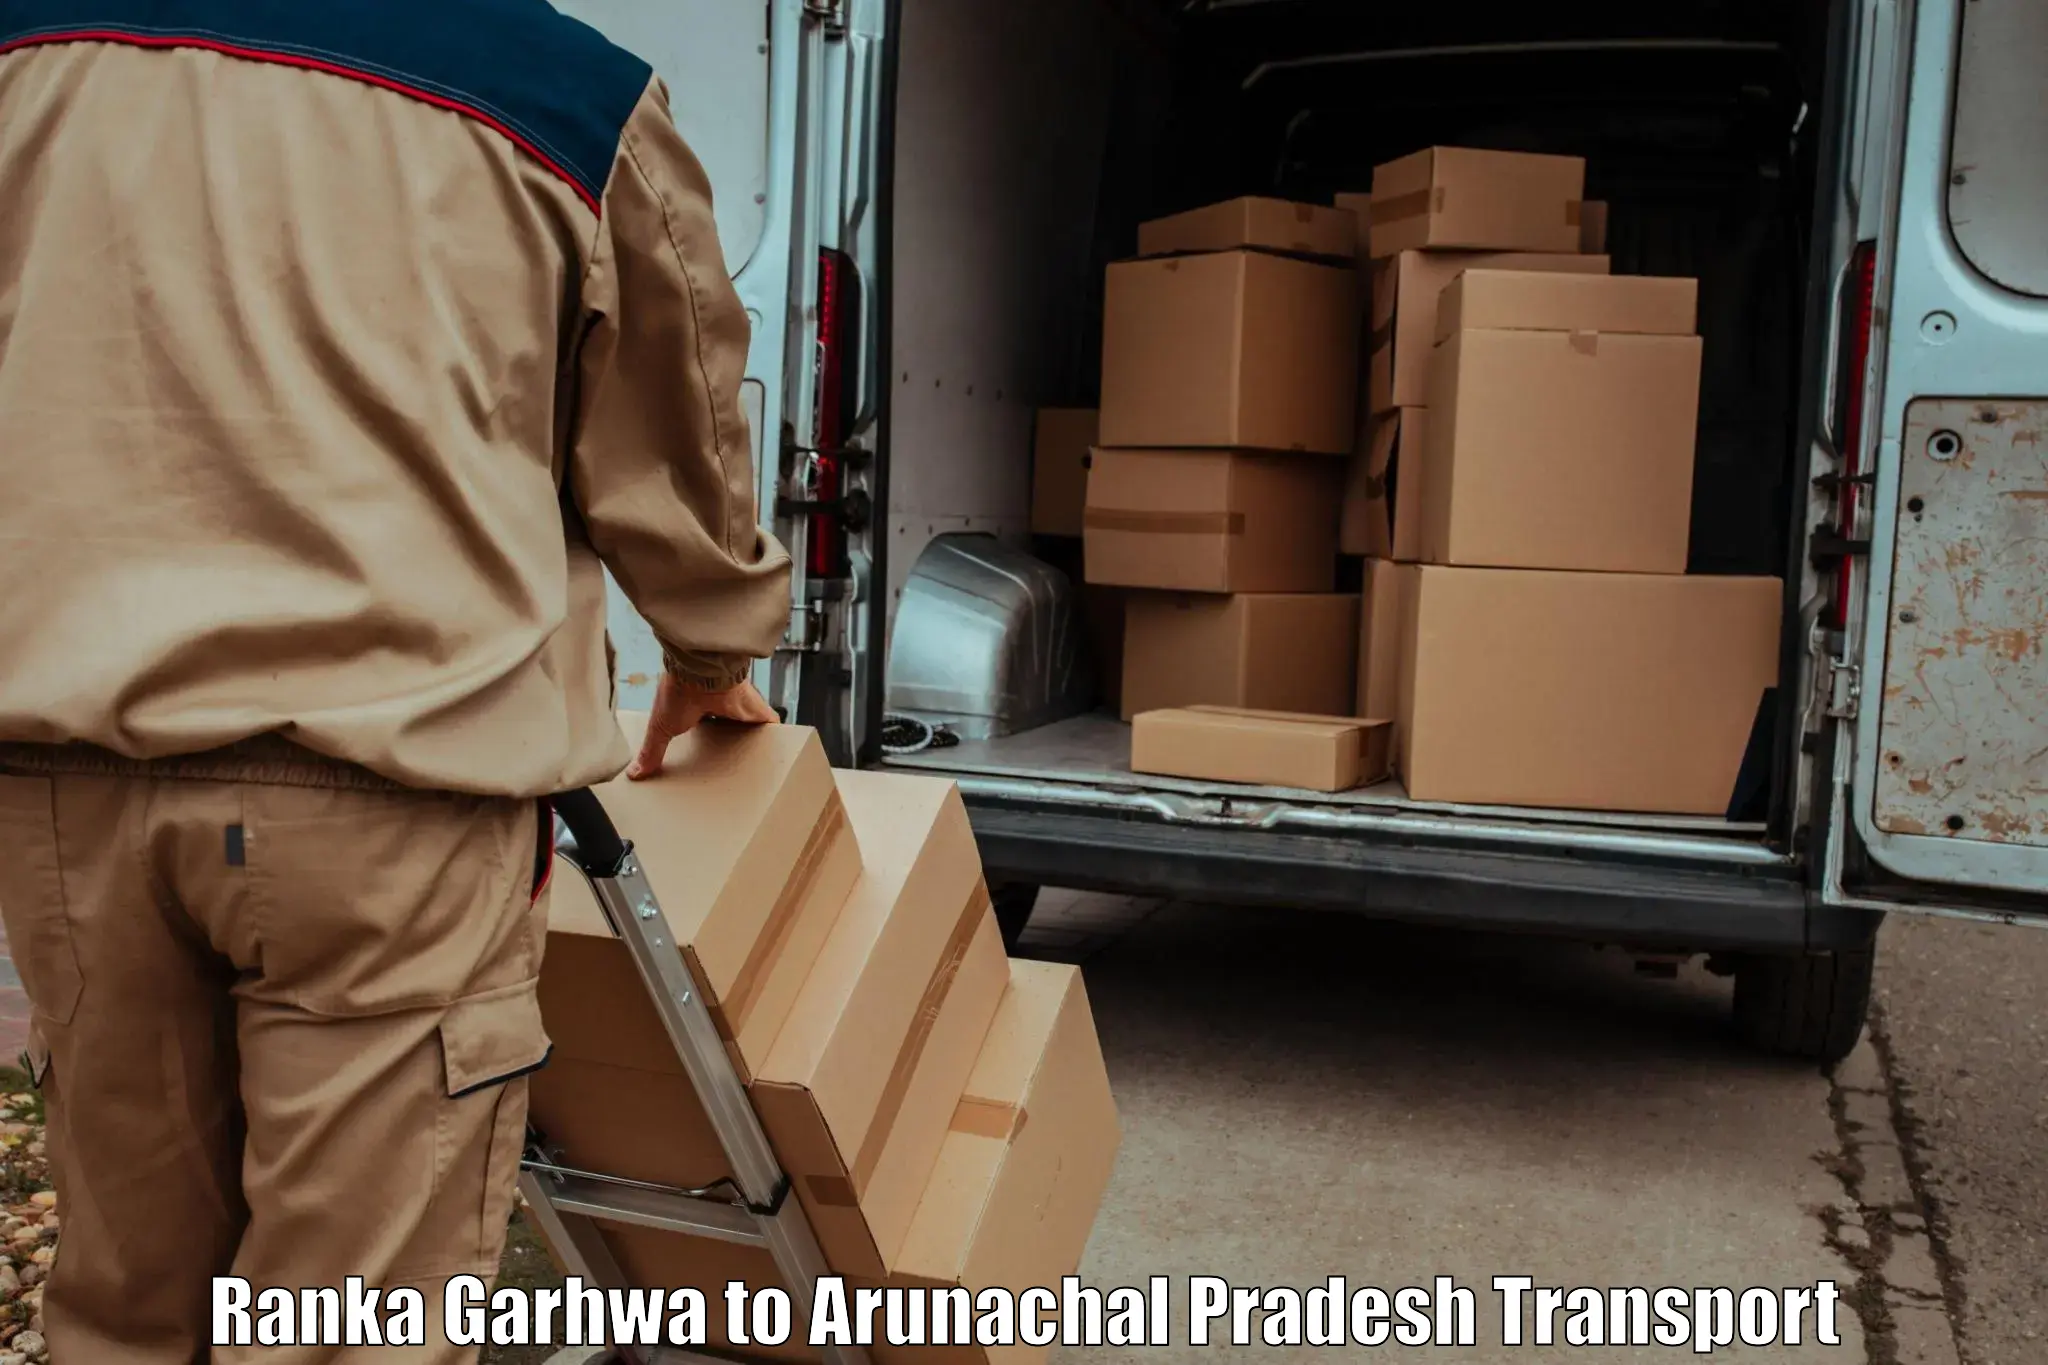 Furniture transport service Ranka Garhwa to Arunachal Pradesh